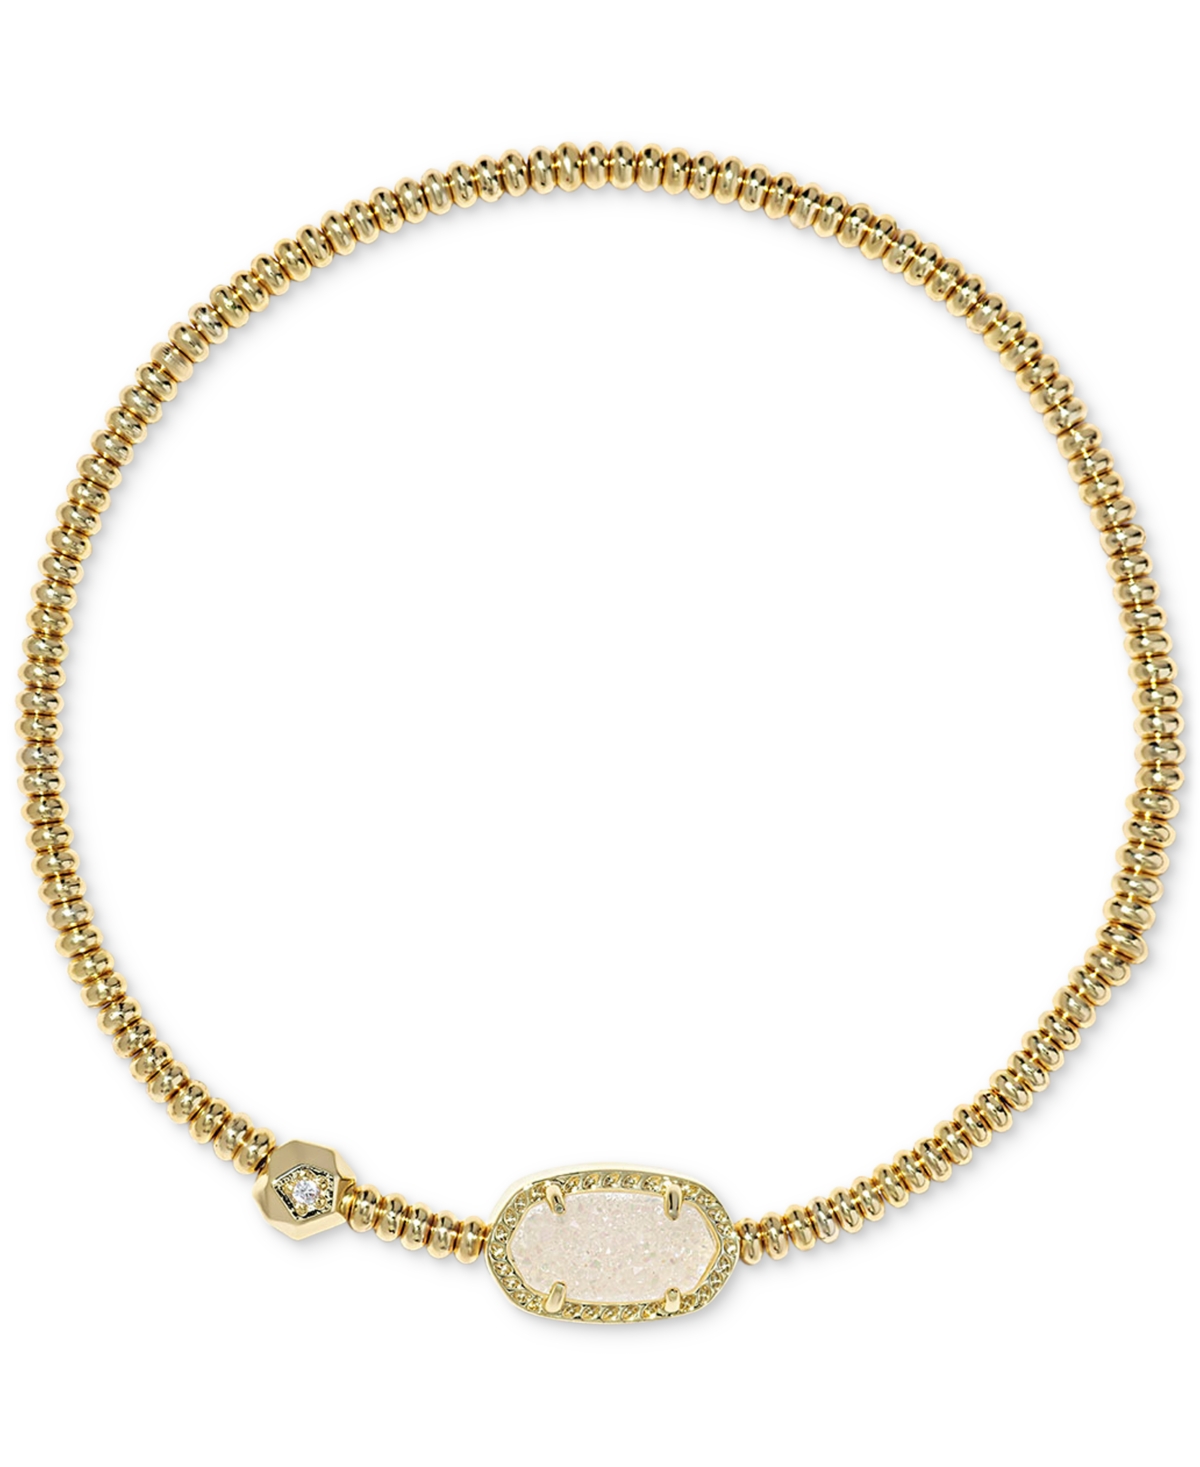 Kendra Scott 14k Gold-plated Gemstone Beaded Stretch Bracelet In Gold Iridescent Drusy